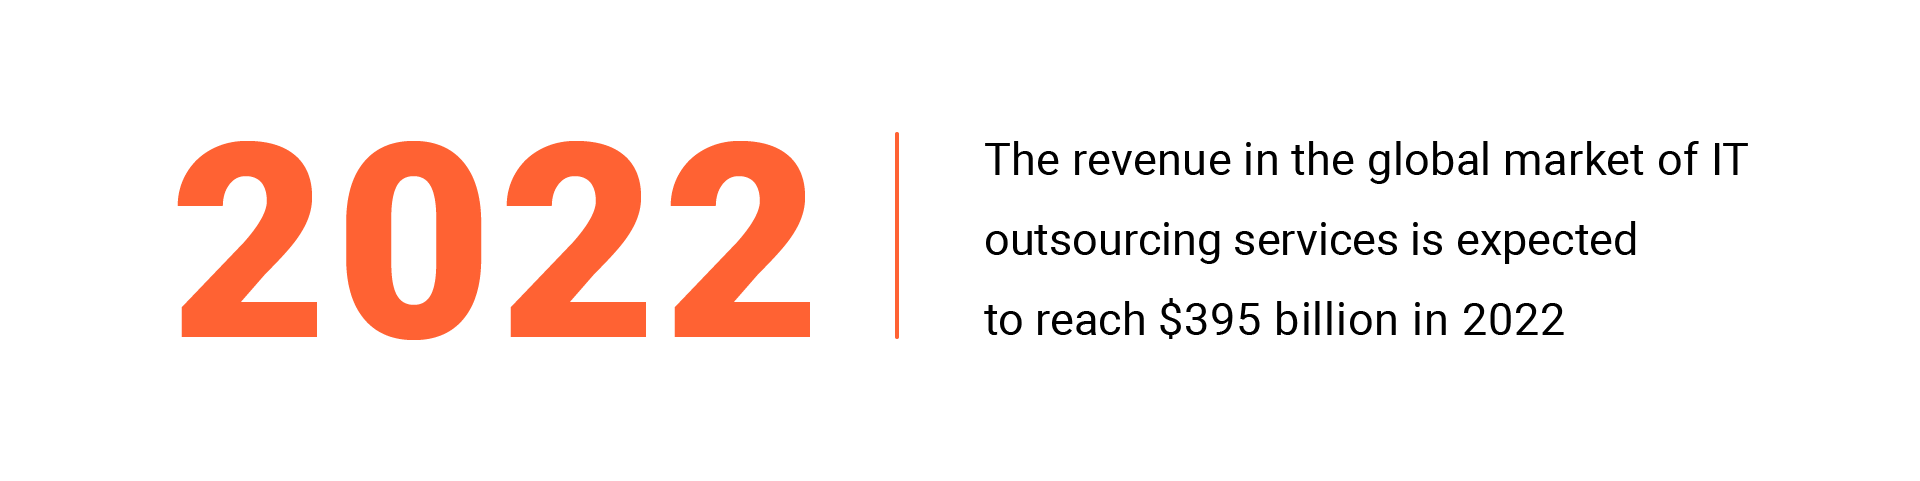 revenue in IT the outsourcing segment